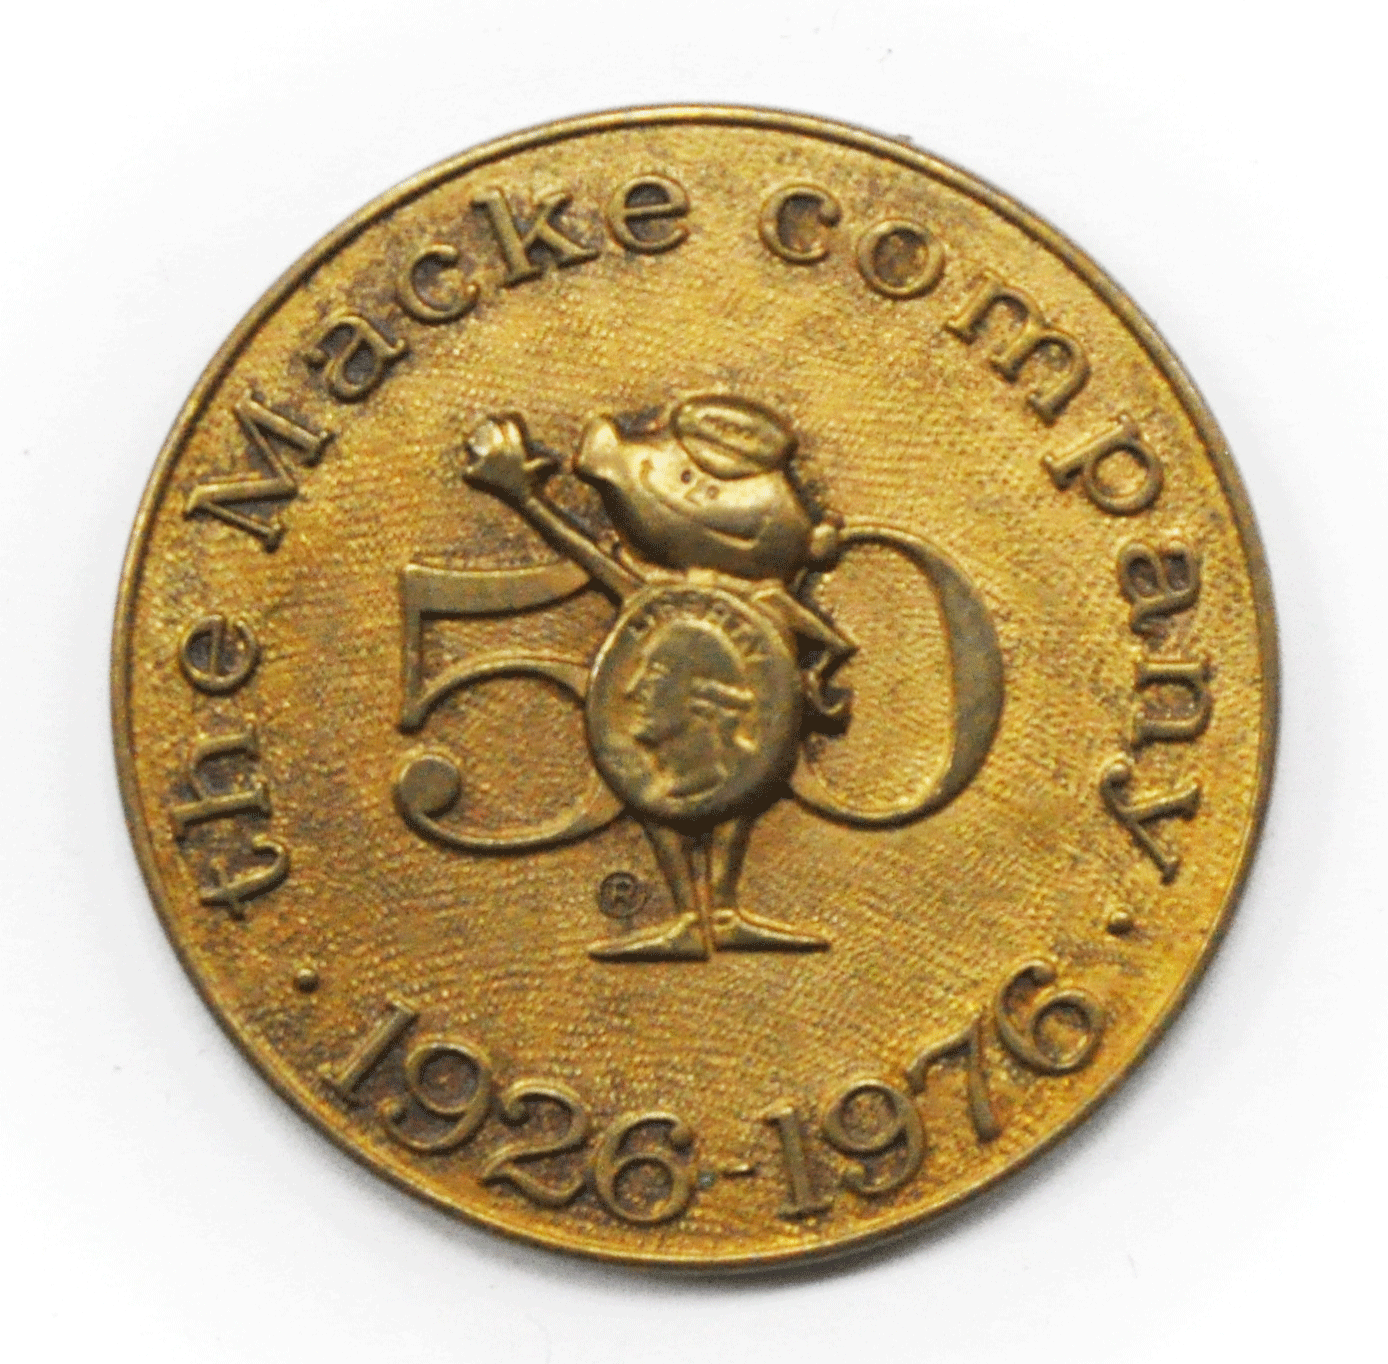 1976 Mack Company 50 Year Anniversary Medal 38mm